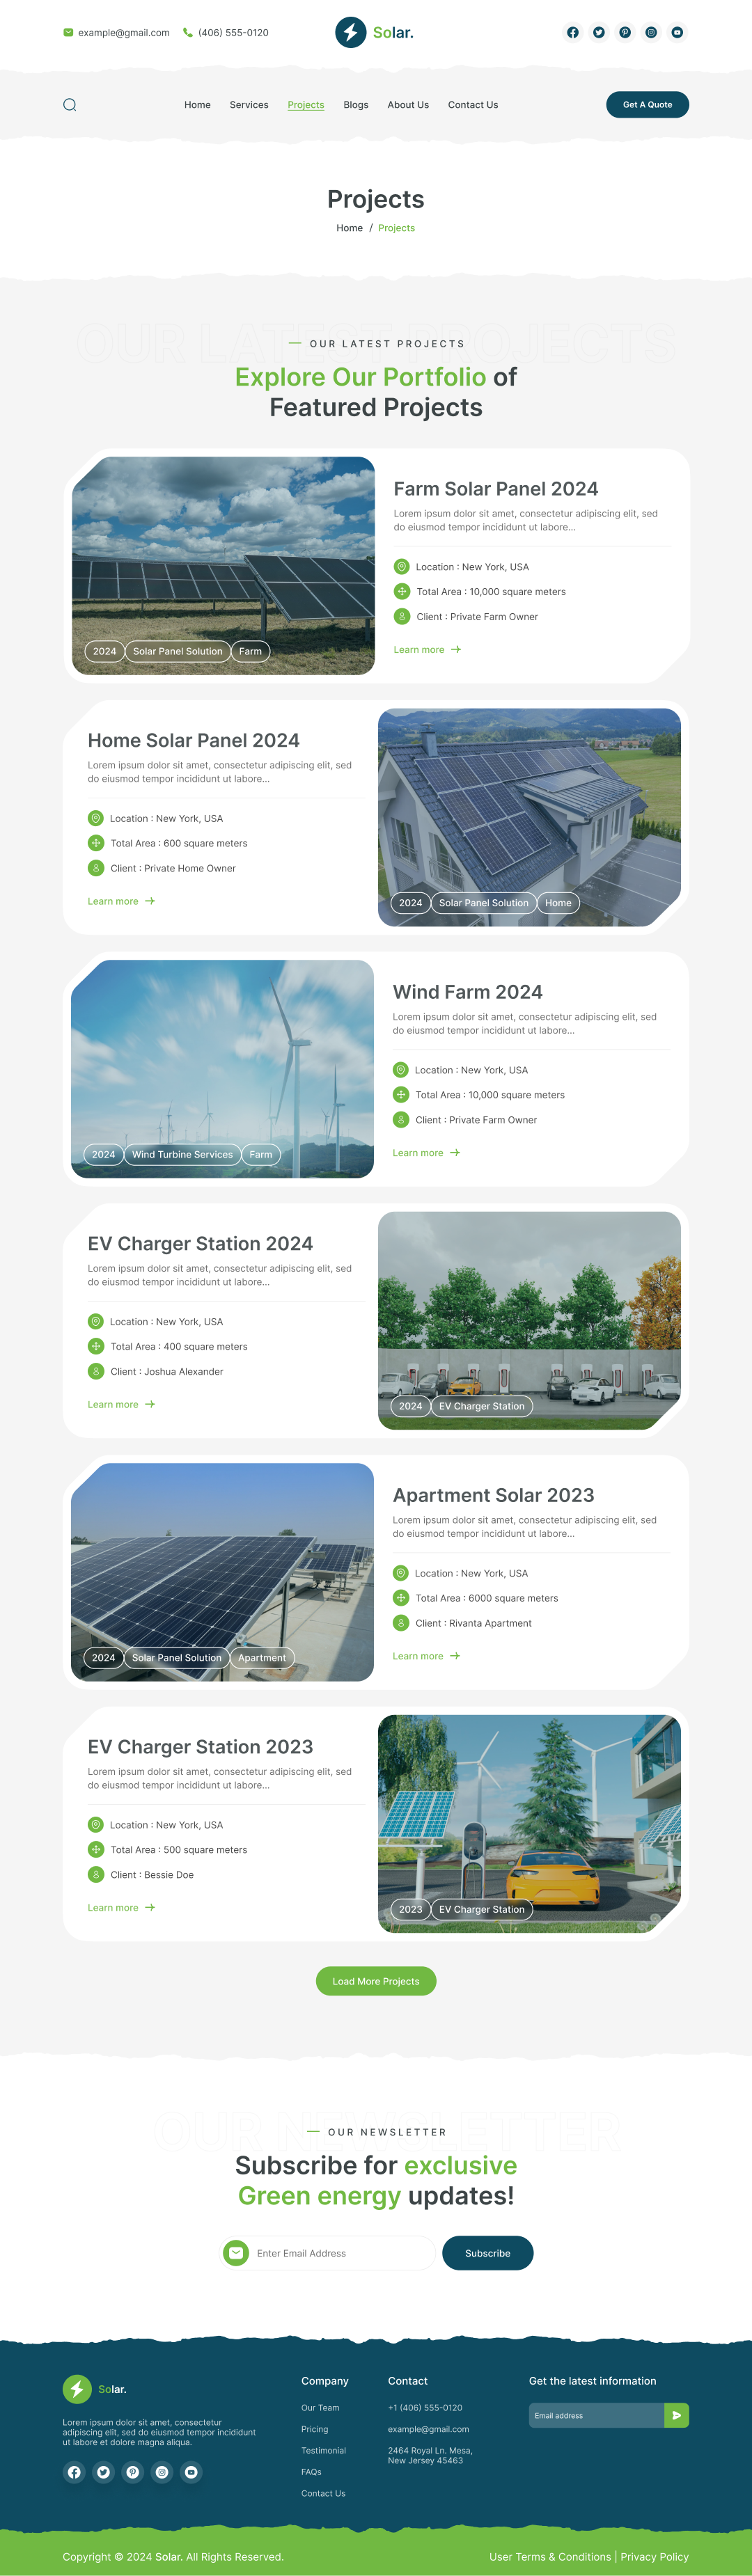 solar energy website Project page ui ux design figma 